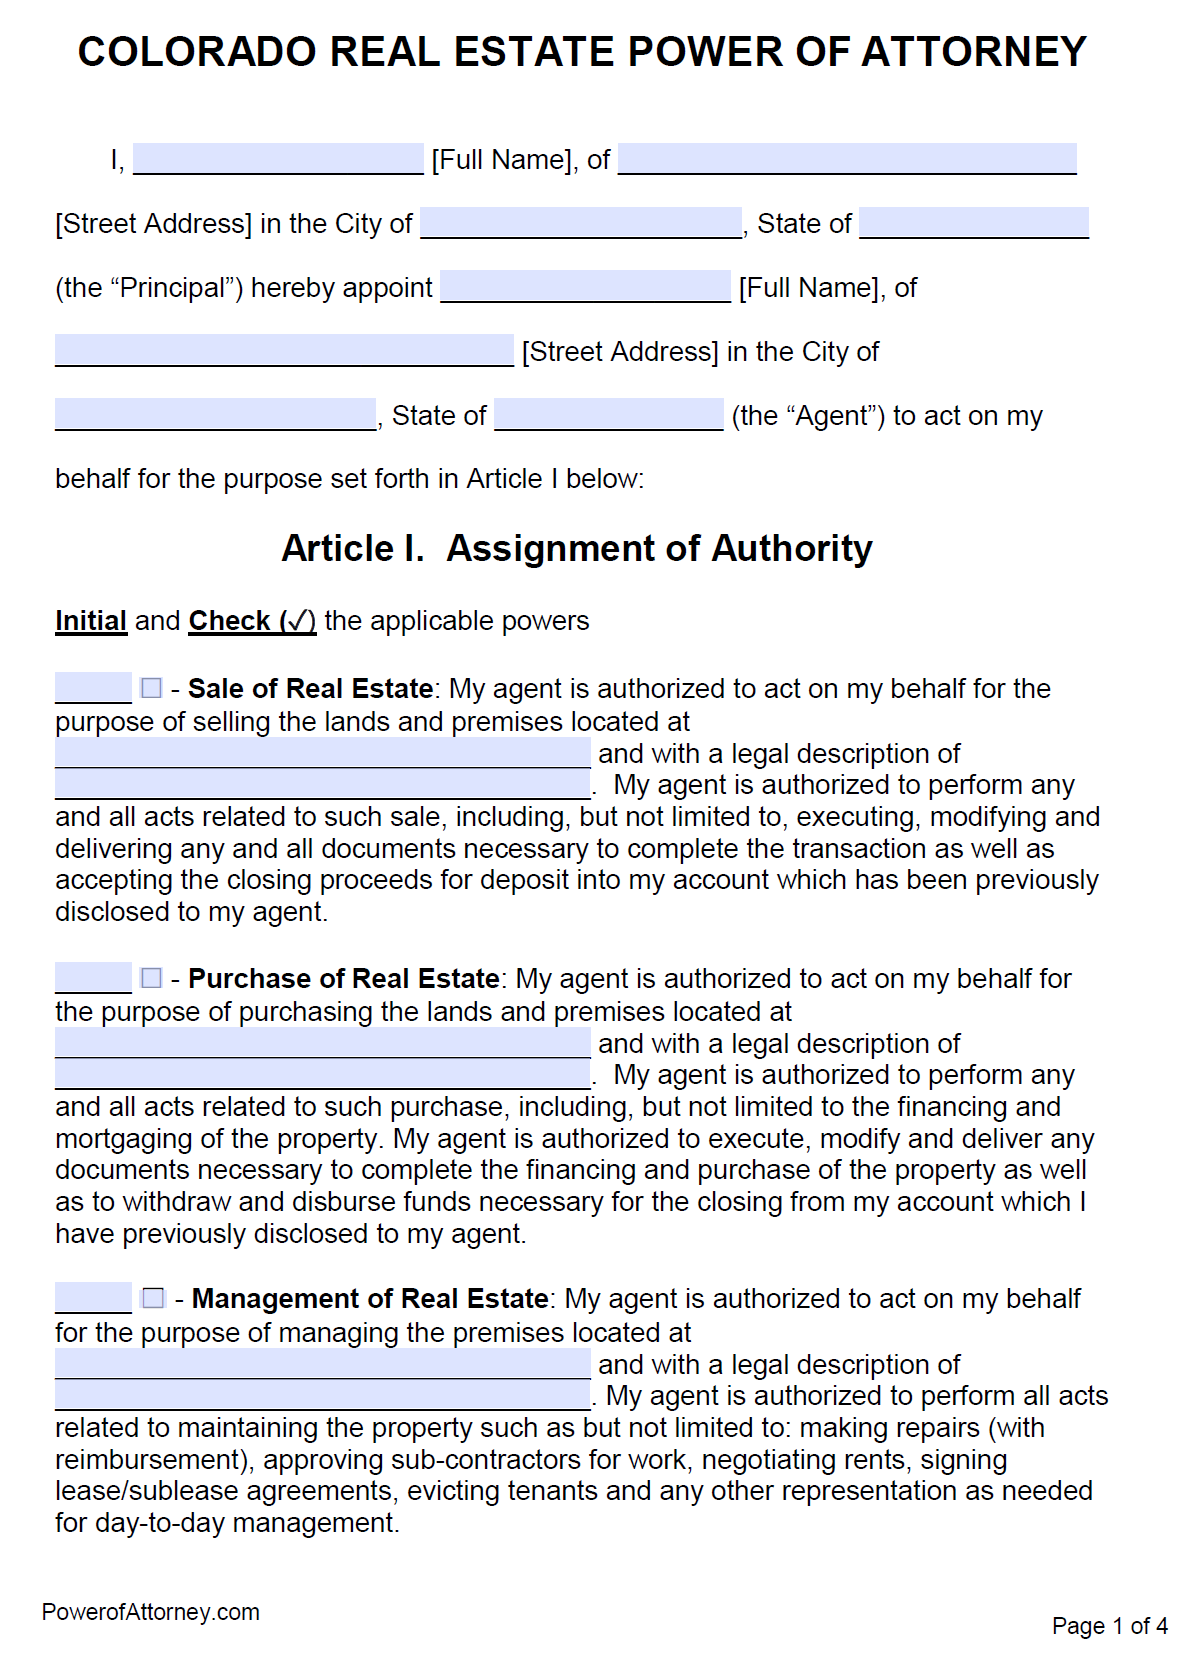 free-real-estate-power-of-attorney-colorado-form-pdf-word